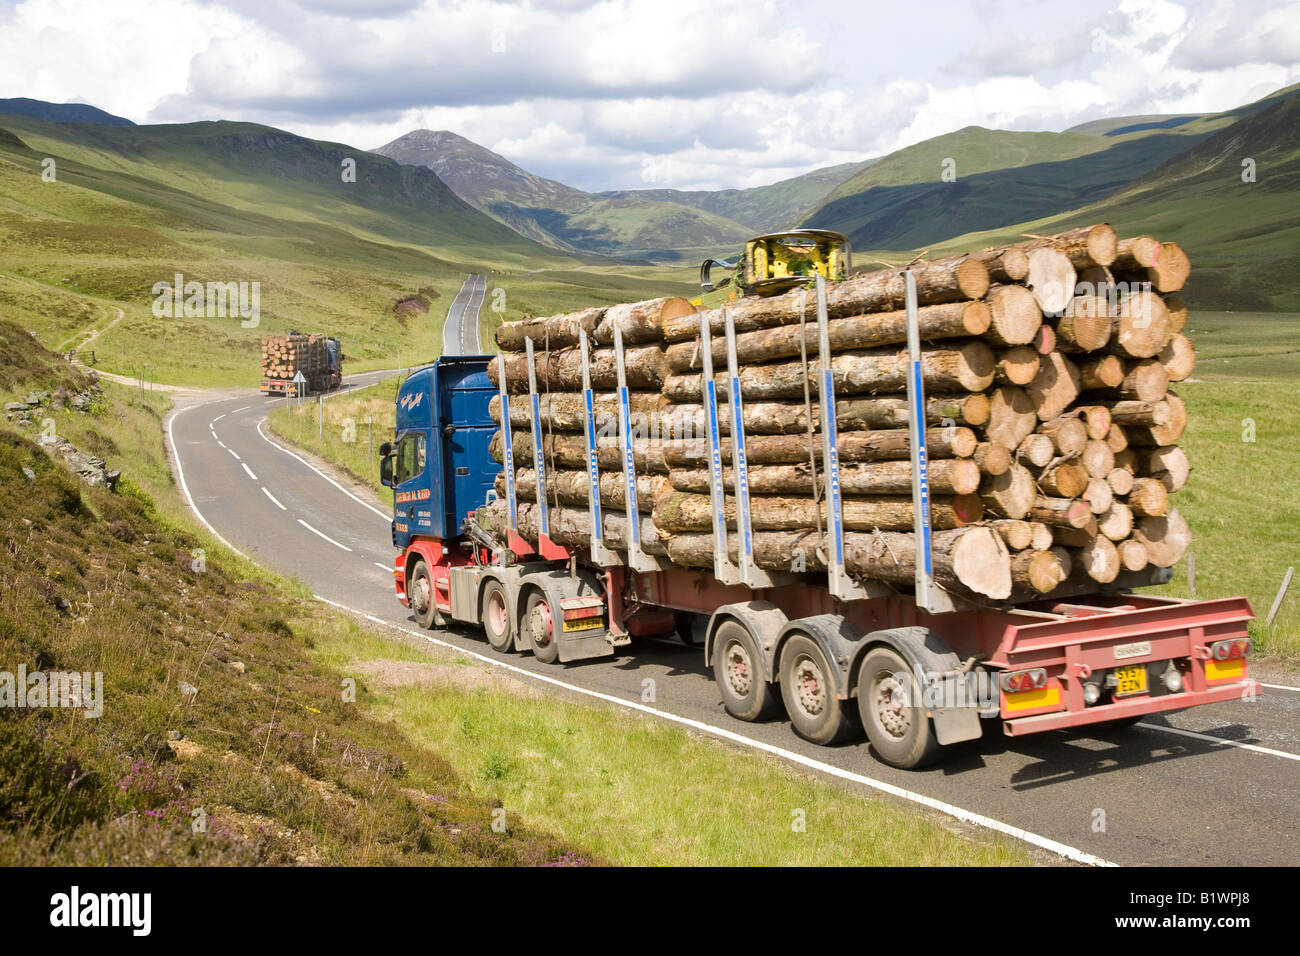 Braemar A93 Industria maderera escocesa, camión maderero, trozas cortadas, transporte pesado por carretera de montaña, Parque Nacional Cairngorms, Escocia, Reino Unido Foto de stock